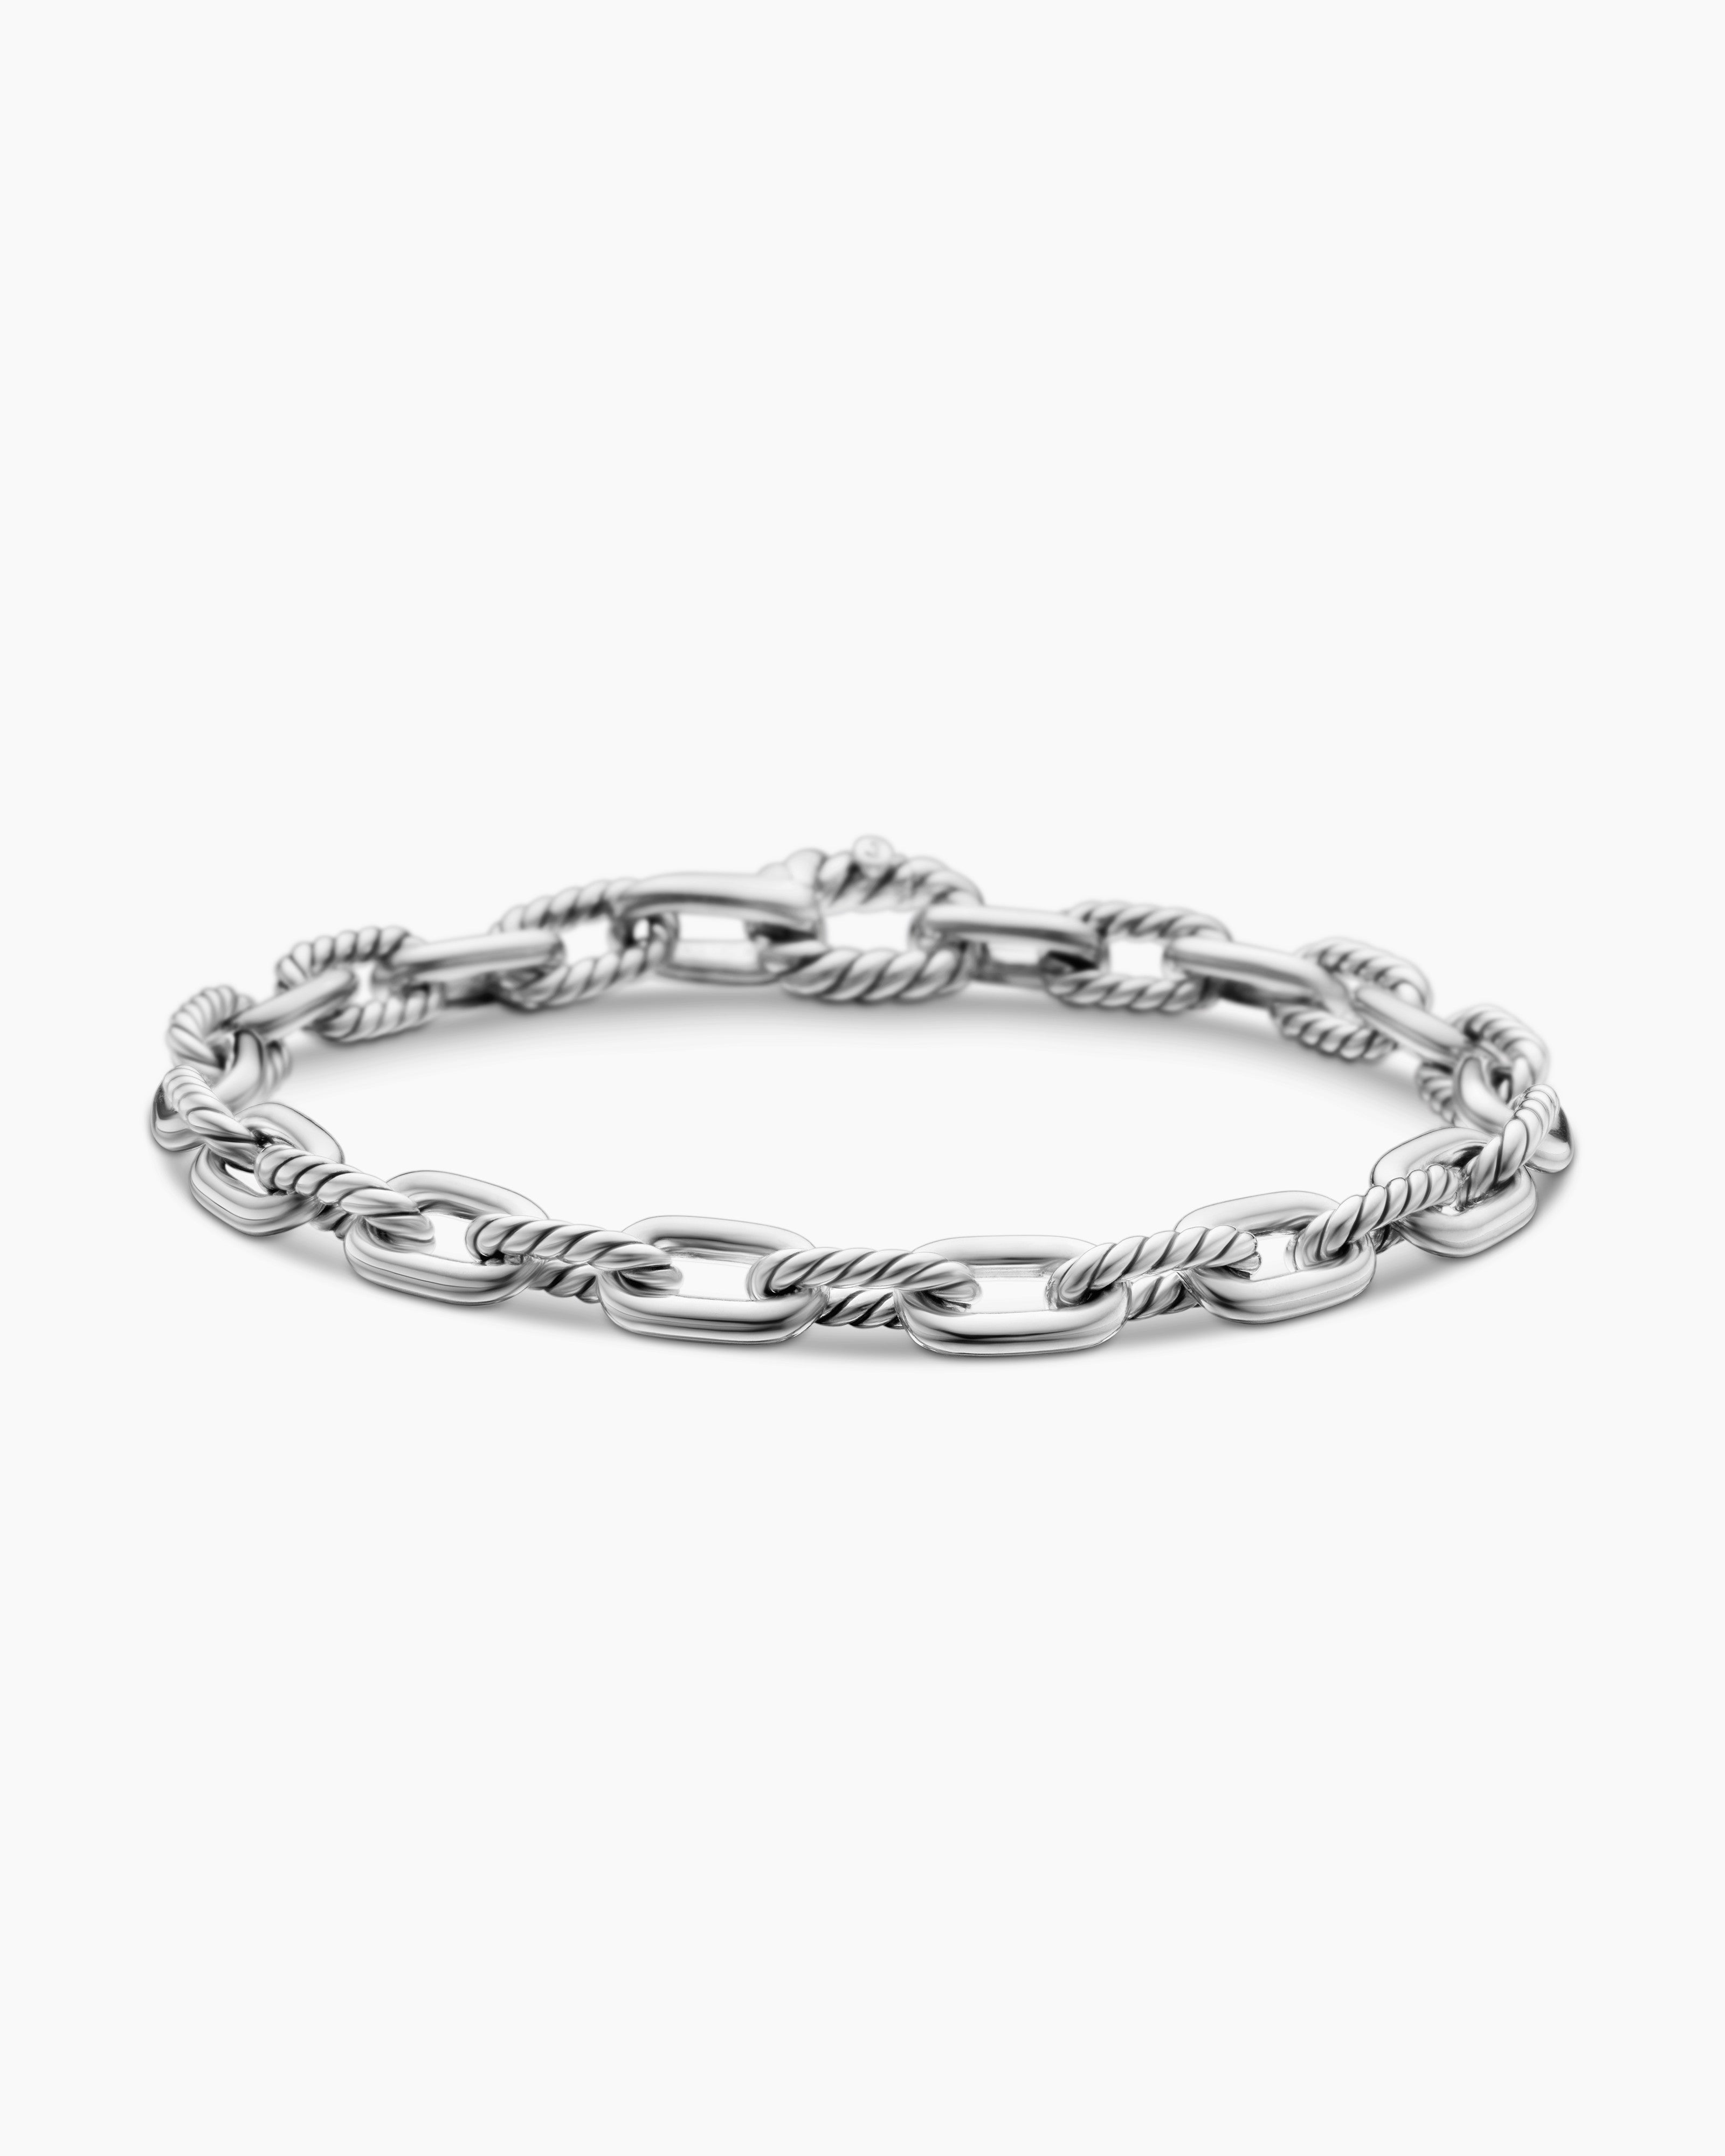 Buy BIS Hallmarked 925 Sterling Silver Designer Chain Link Bracelet for Men  8.5 Inches